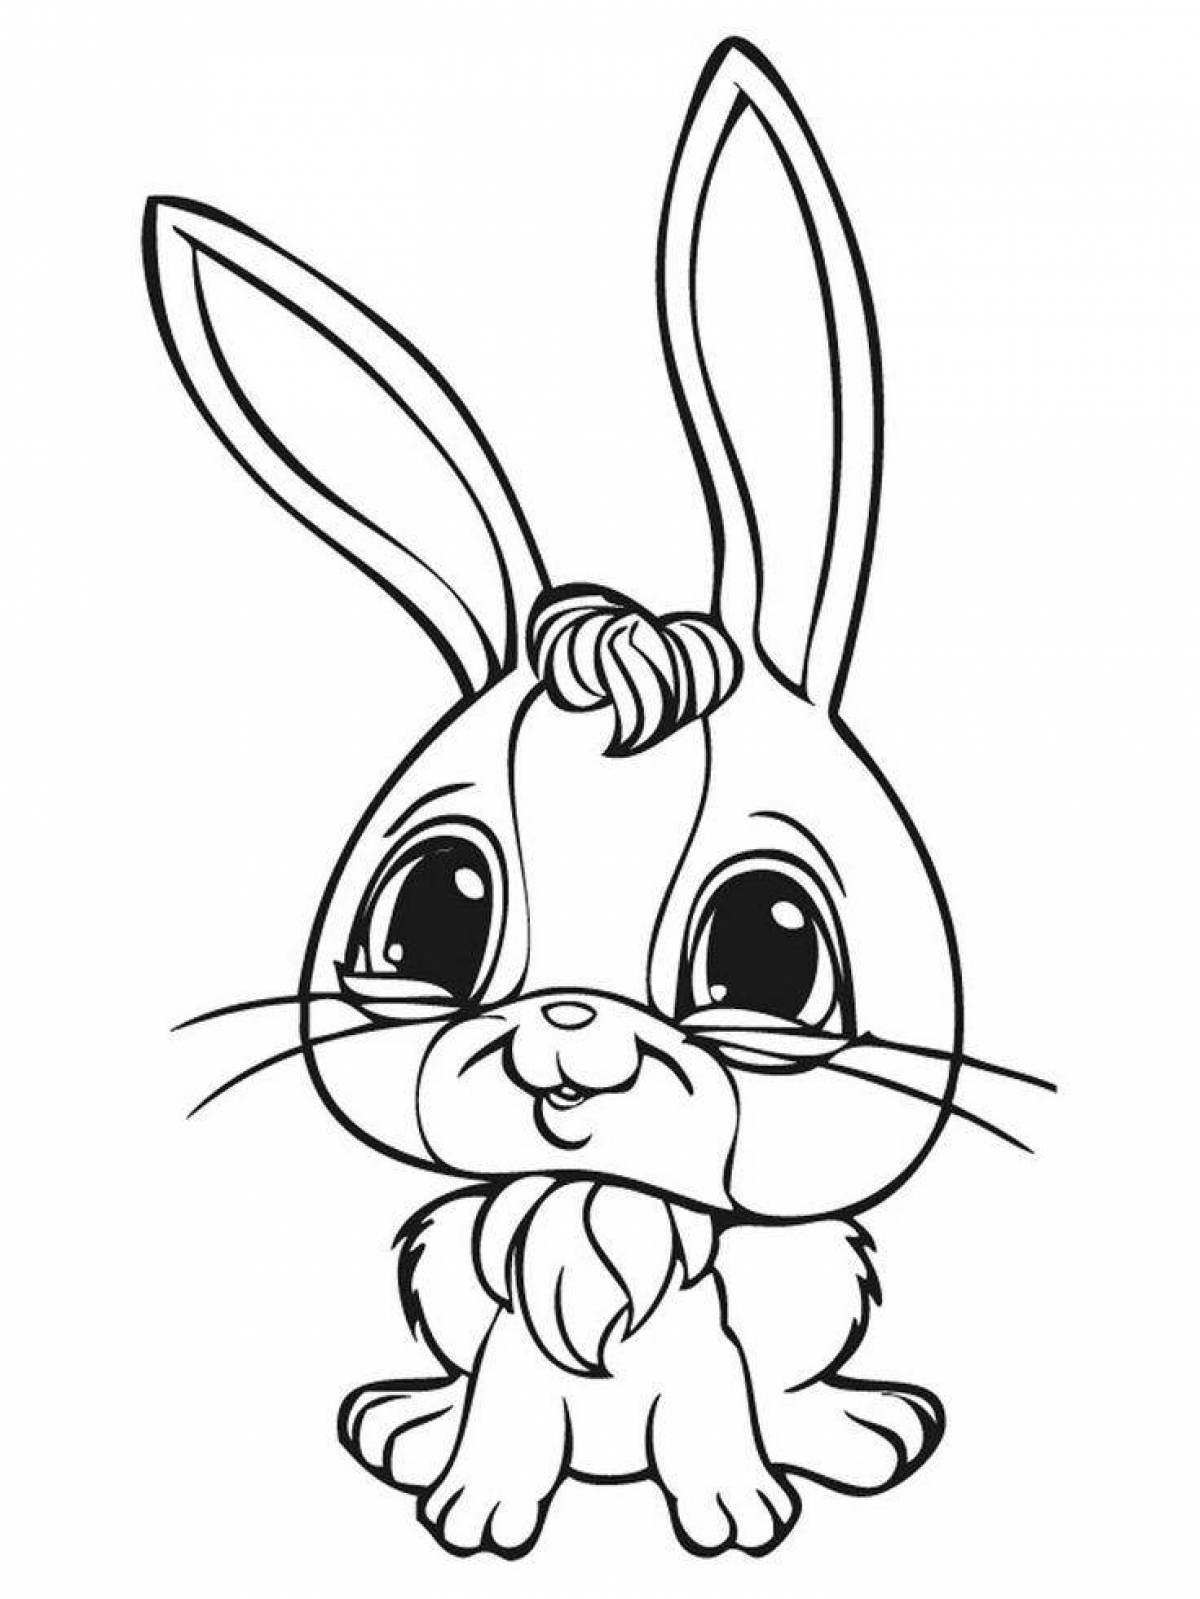 Joyful drawing of a rabbit coloring book